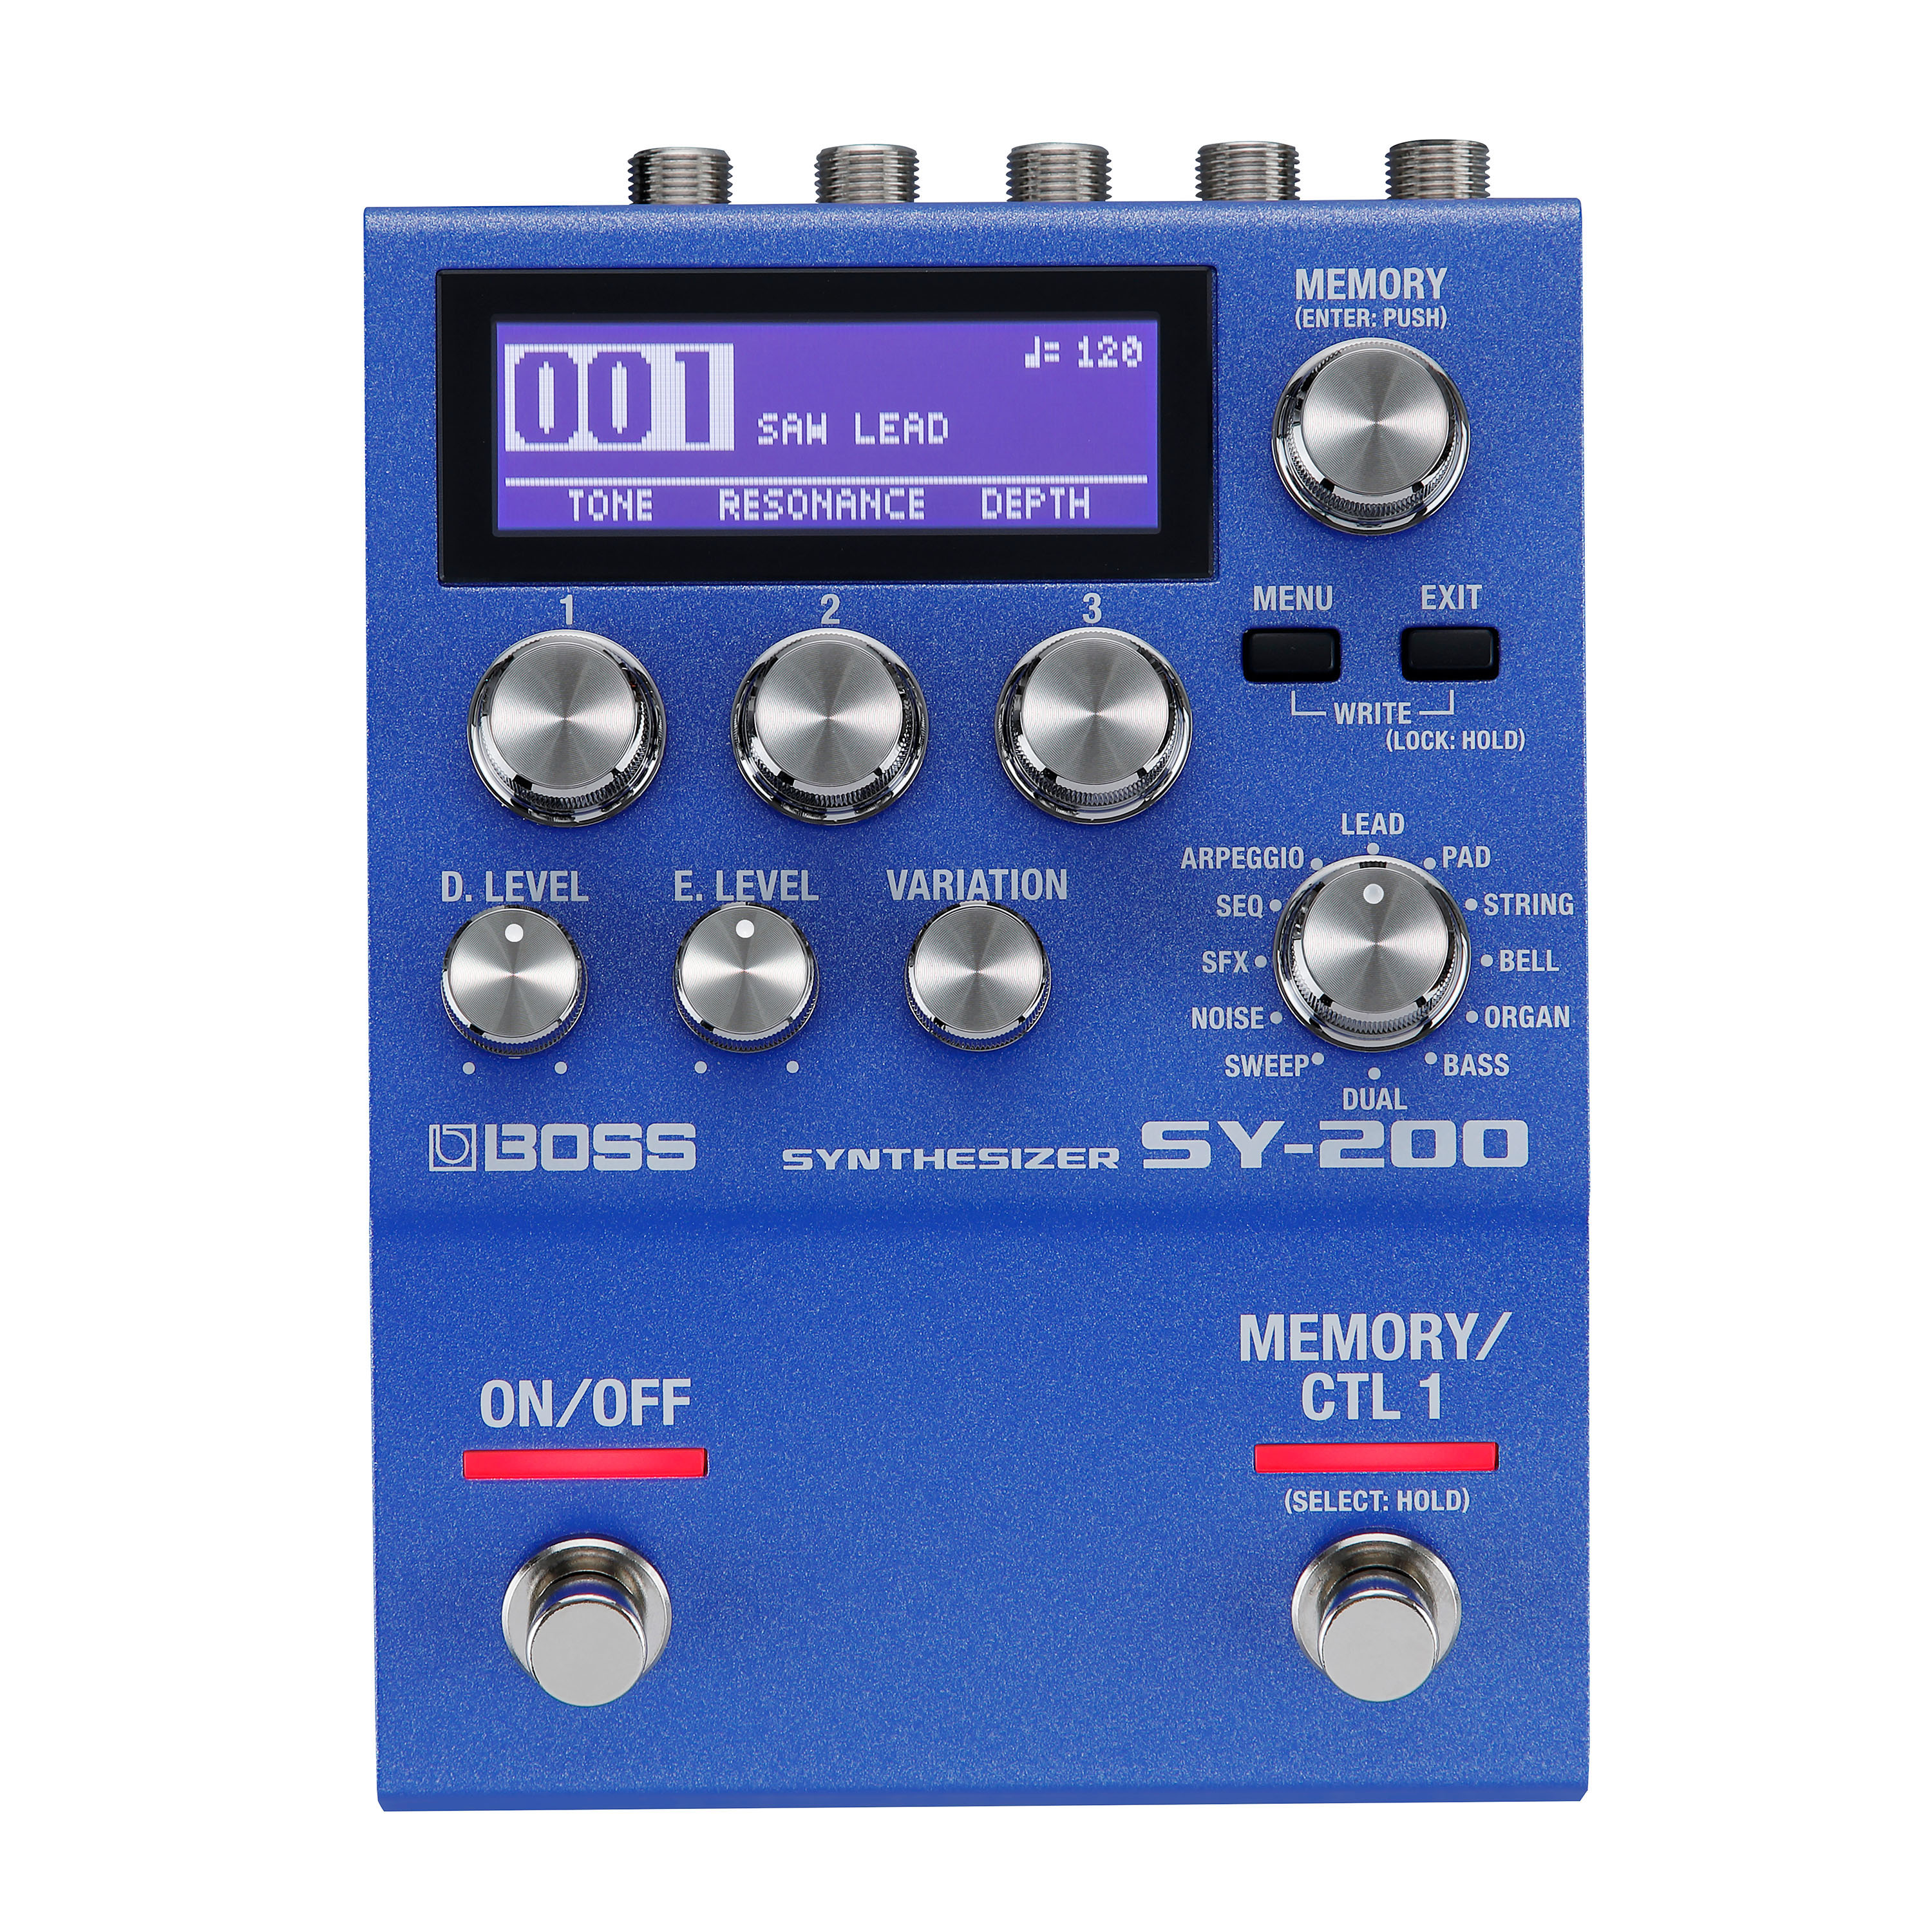 Boss Sy-200 Synthesizer - Guitar Synthesizer - Variation 2